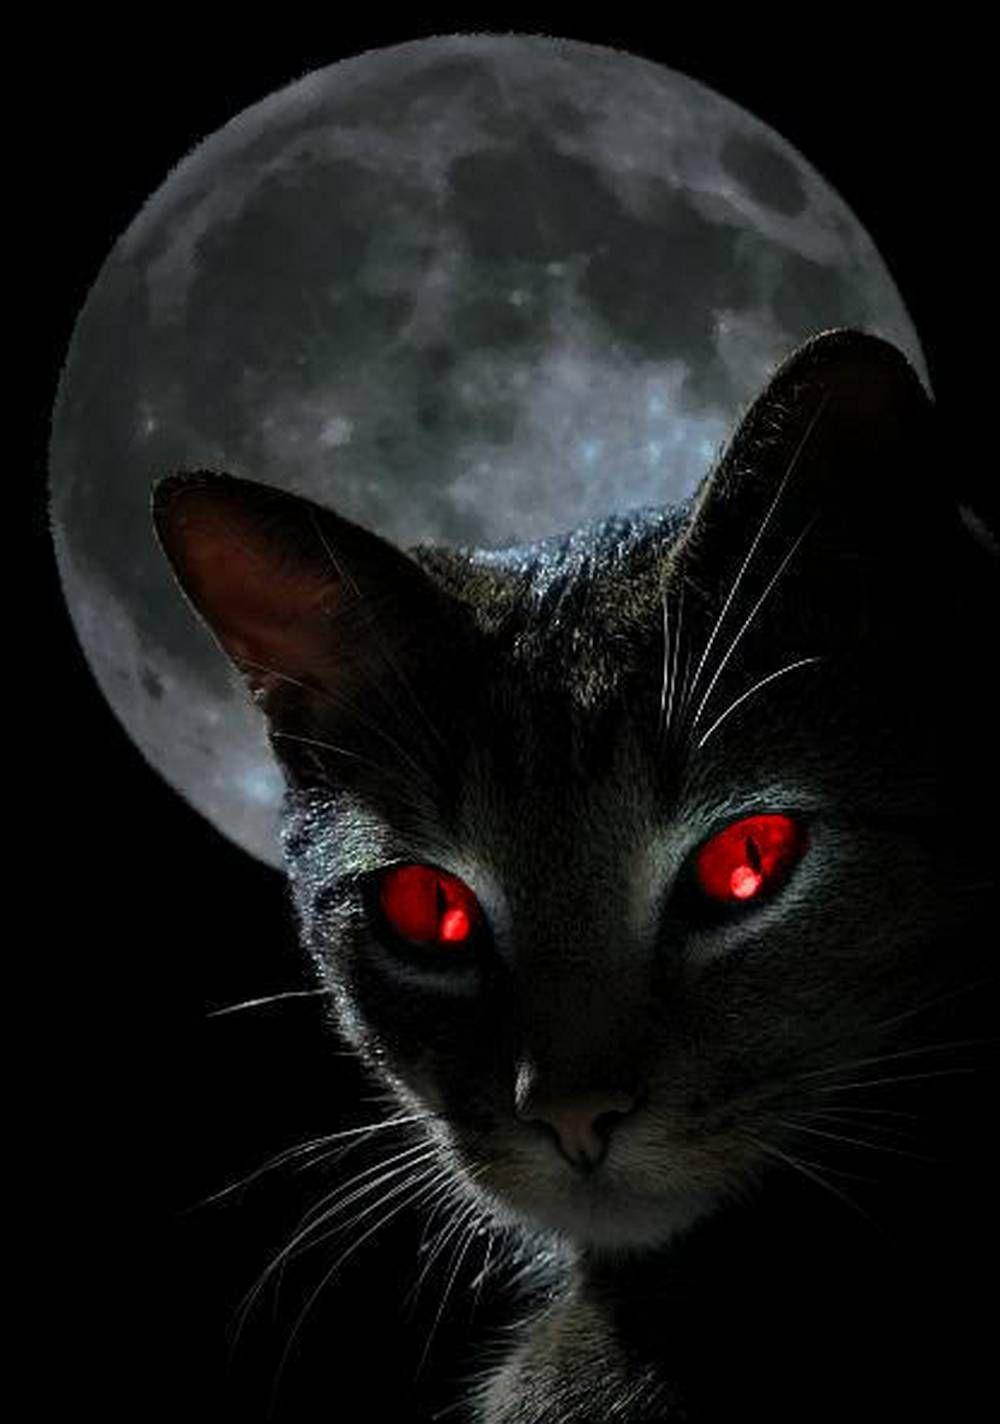 Cat Eyes Black Background image. AηιMαℓ ⓞƒ тĤє MⓞηтĤ - ۞ GORILLA